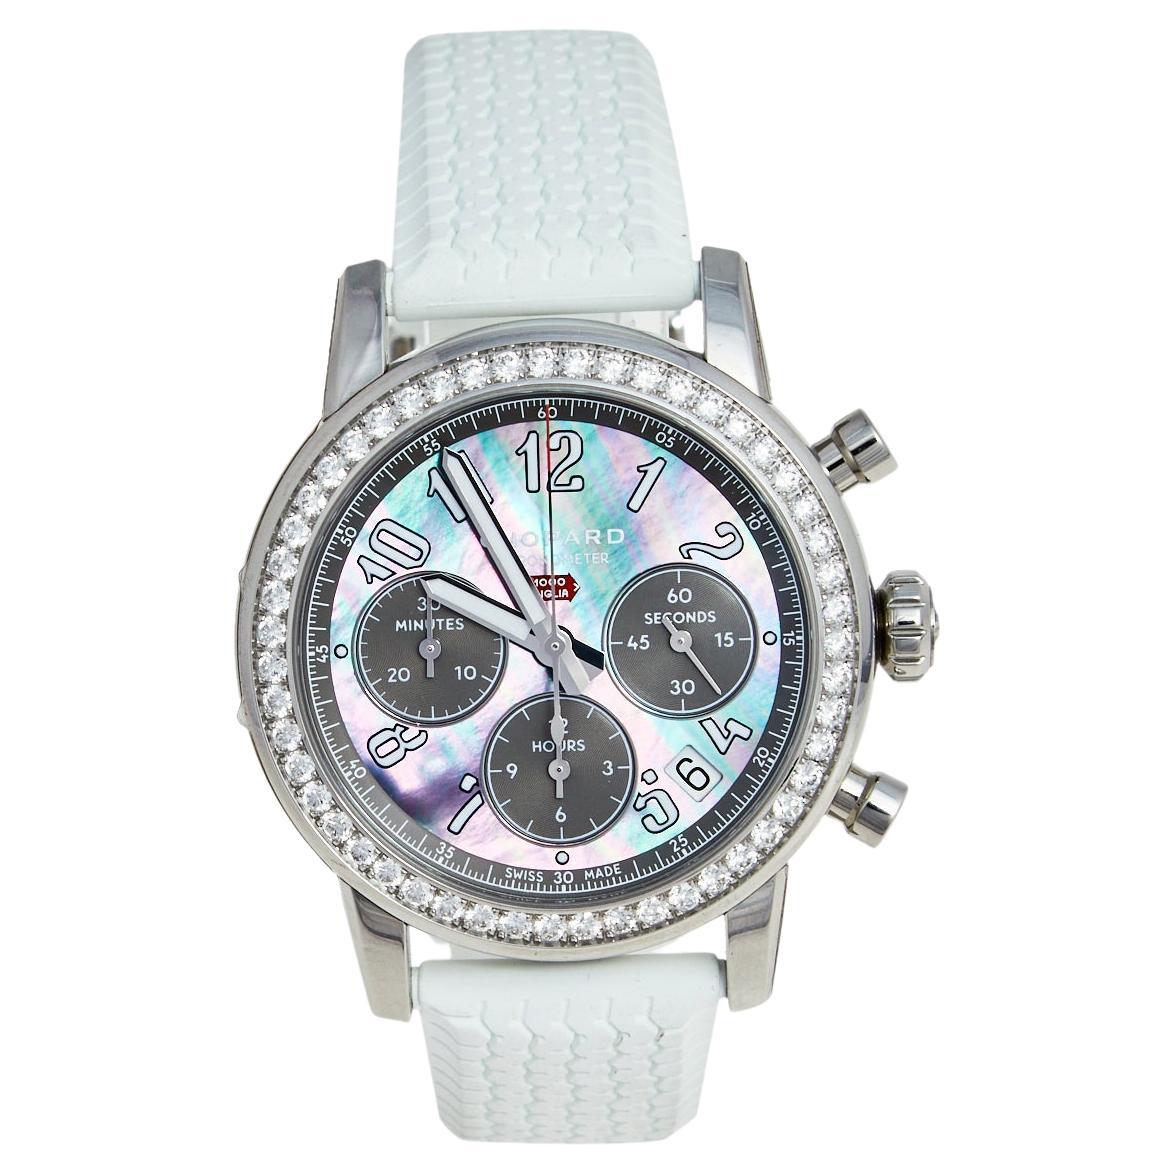 Chopard Mother of Pearl Stainless Steel Diamond Rubber Women's Wristwatch 39 mm